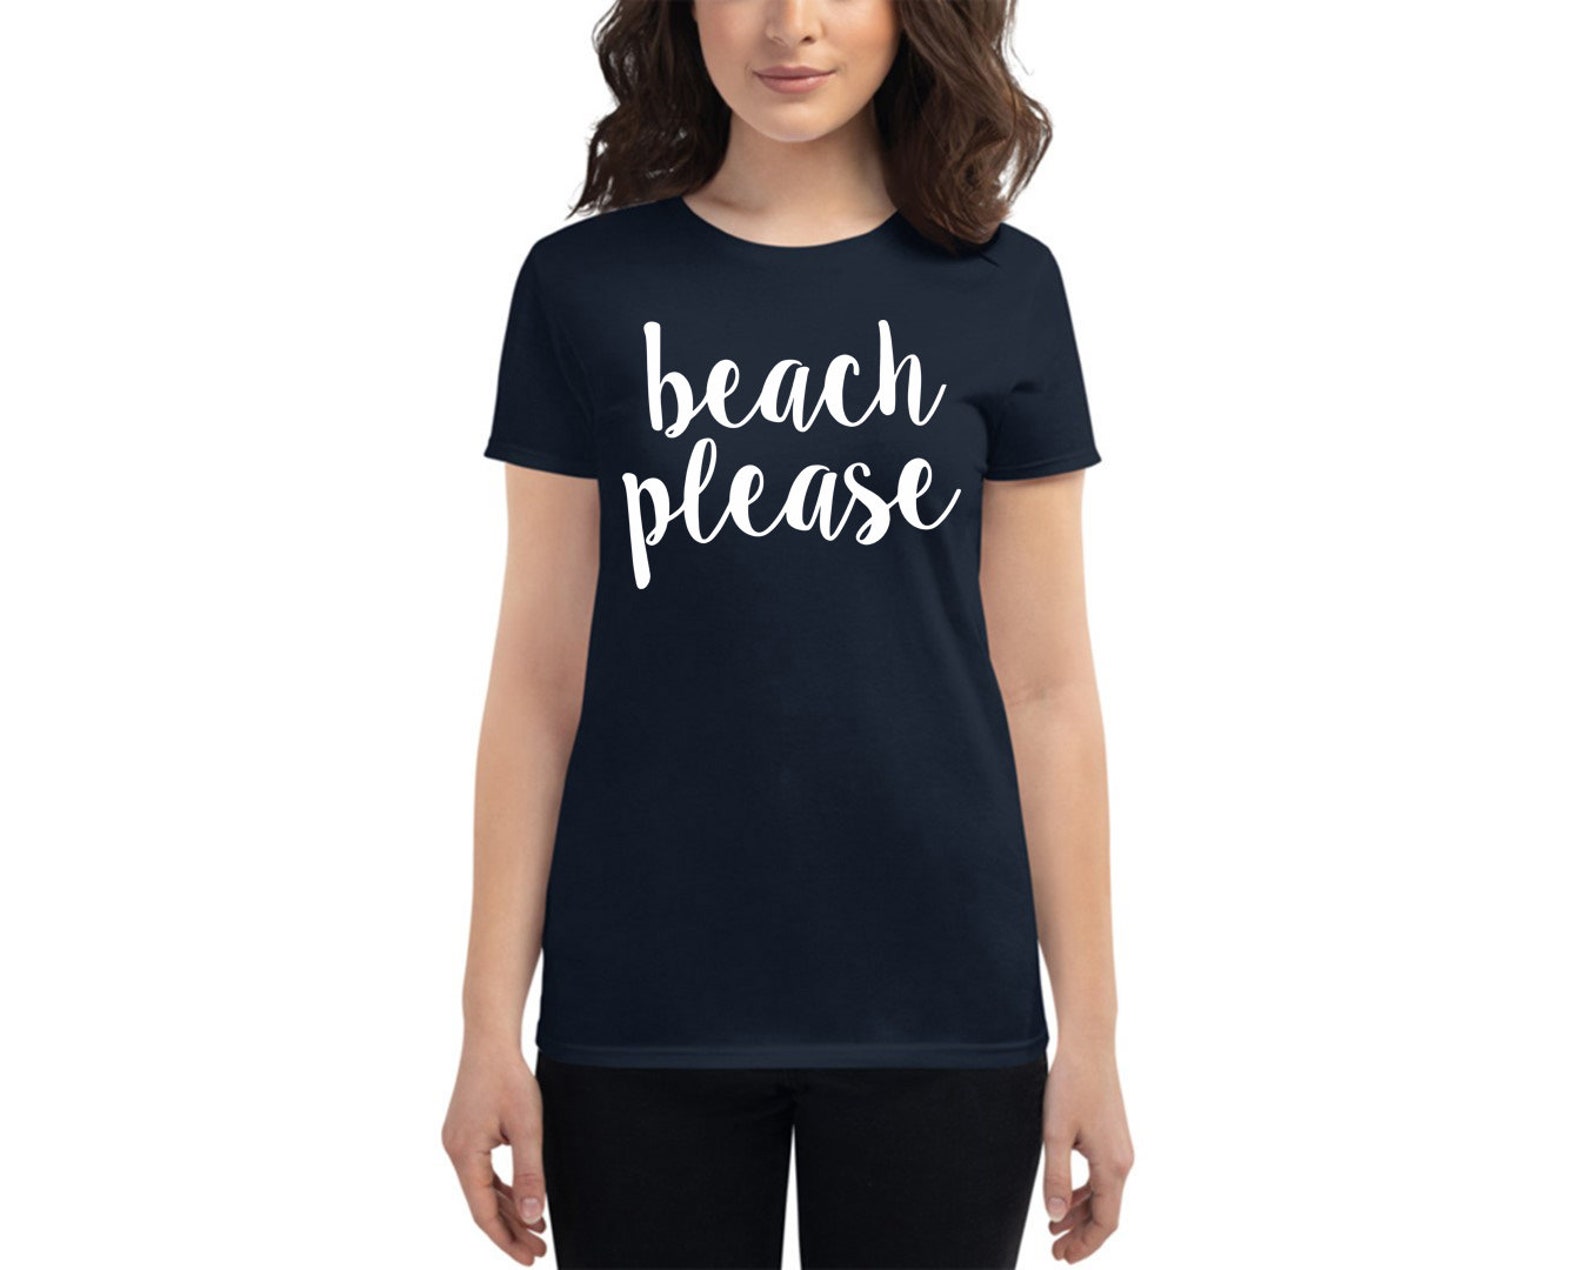 Beach please tees slogan shirt ladies funny graphic shirt | Etsy